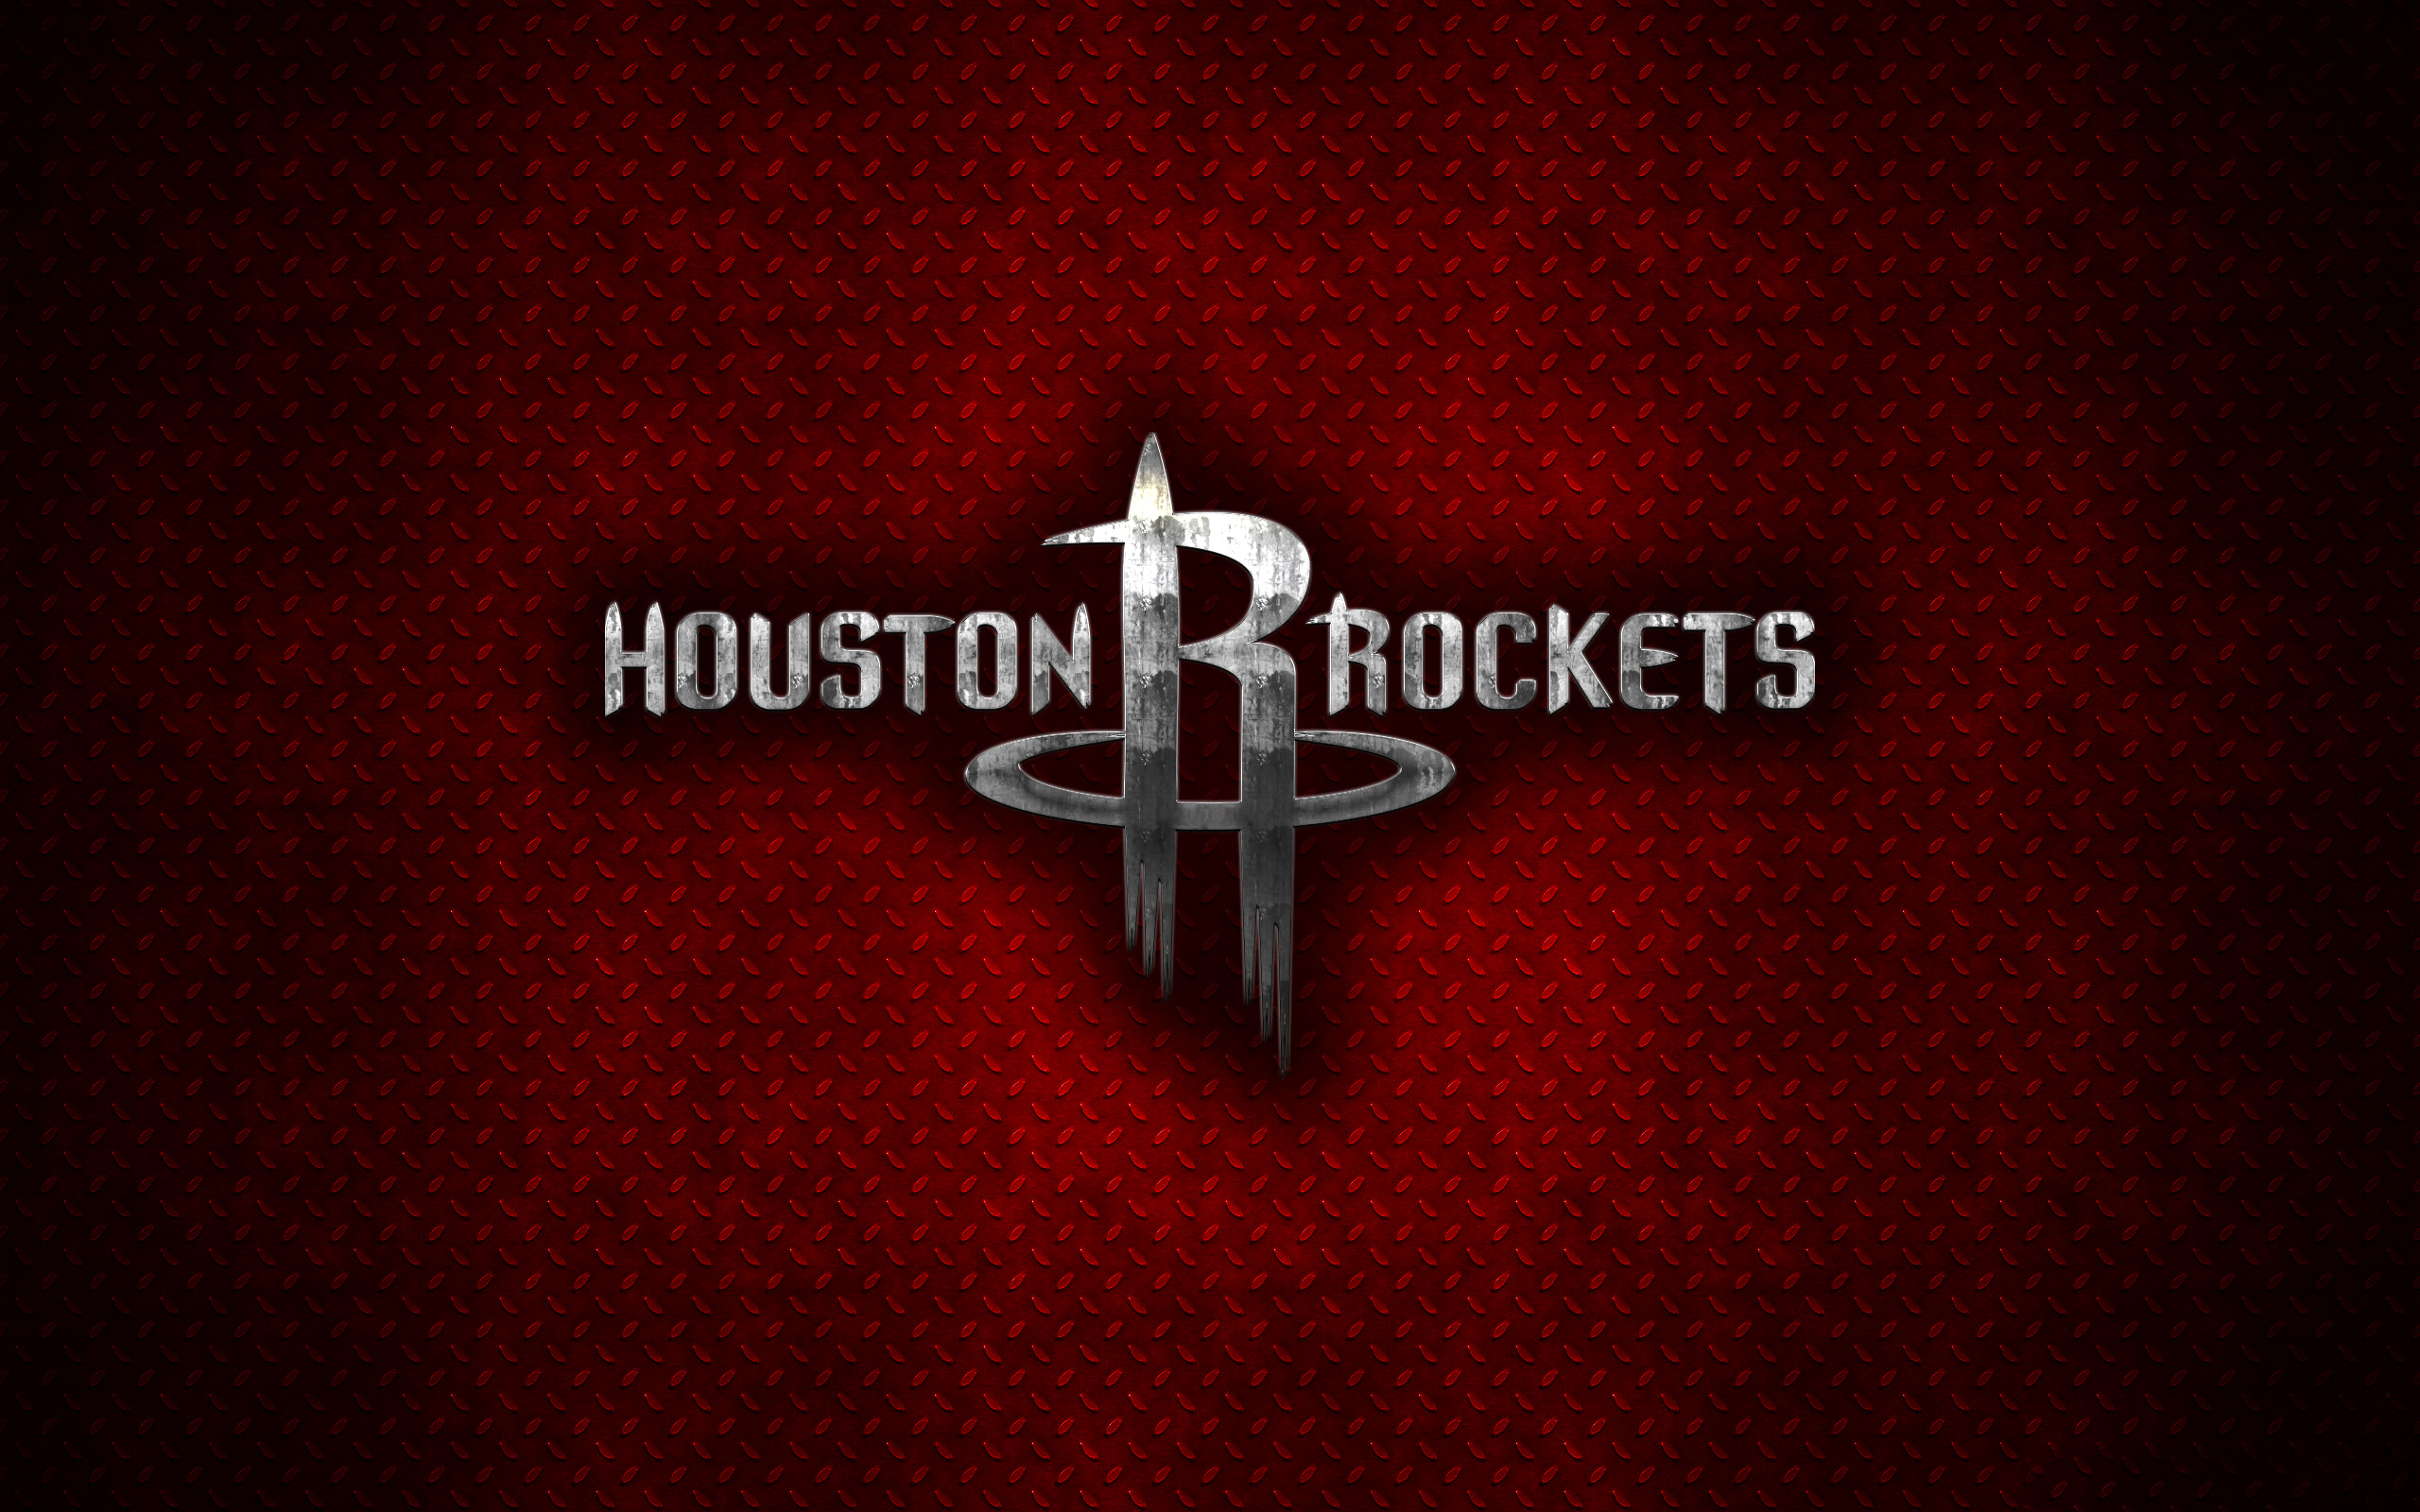 Houston rockets logo and james harden HD wallpaper download